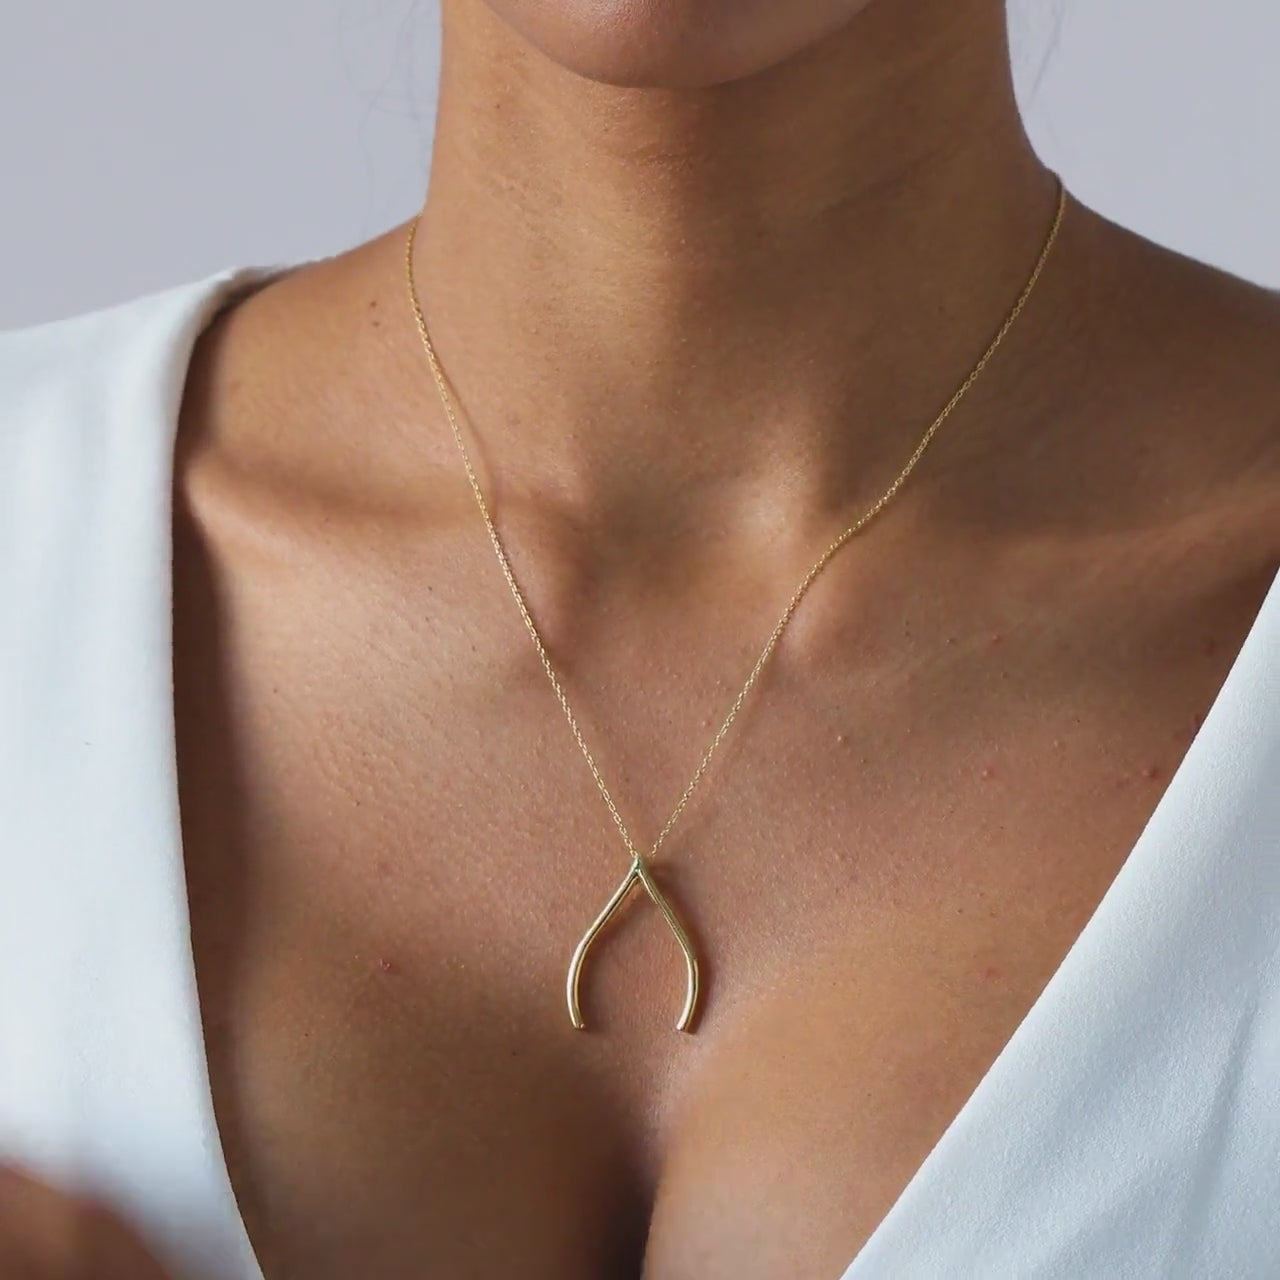 Original Ring Holder Necklace | Cynthia Britt